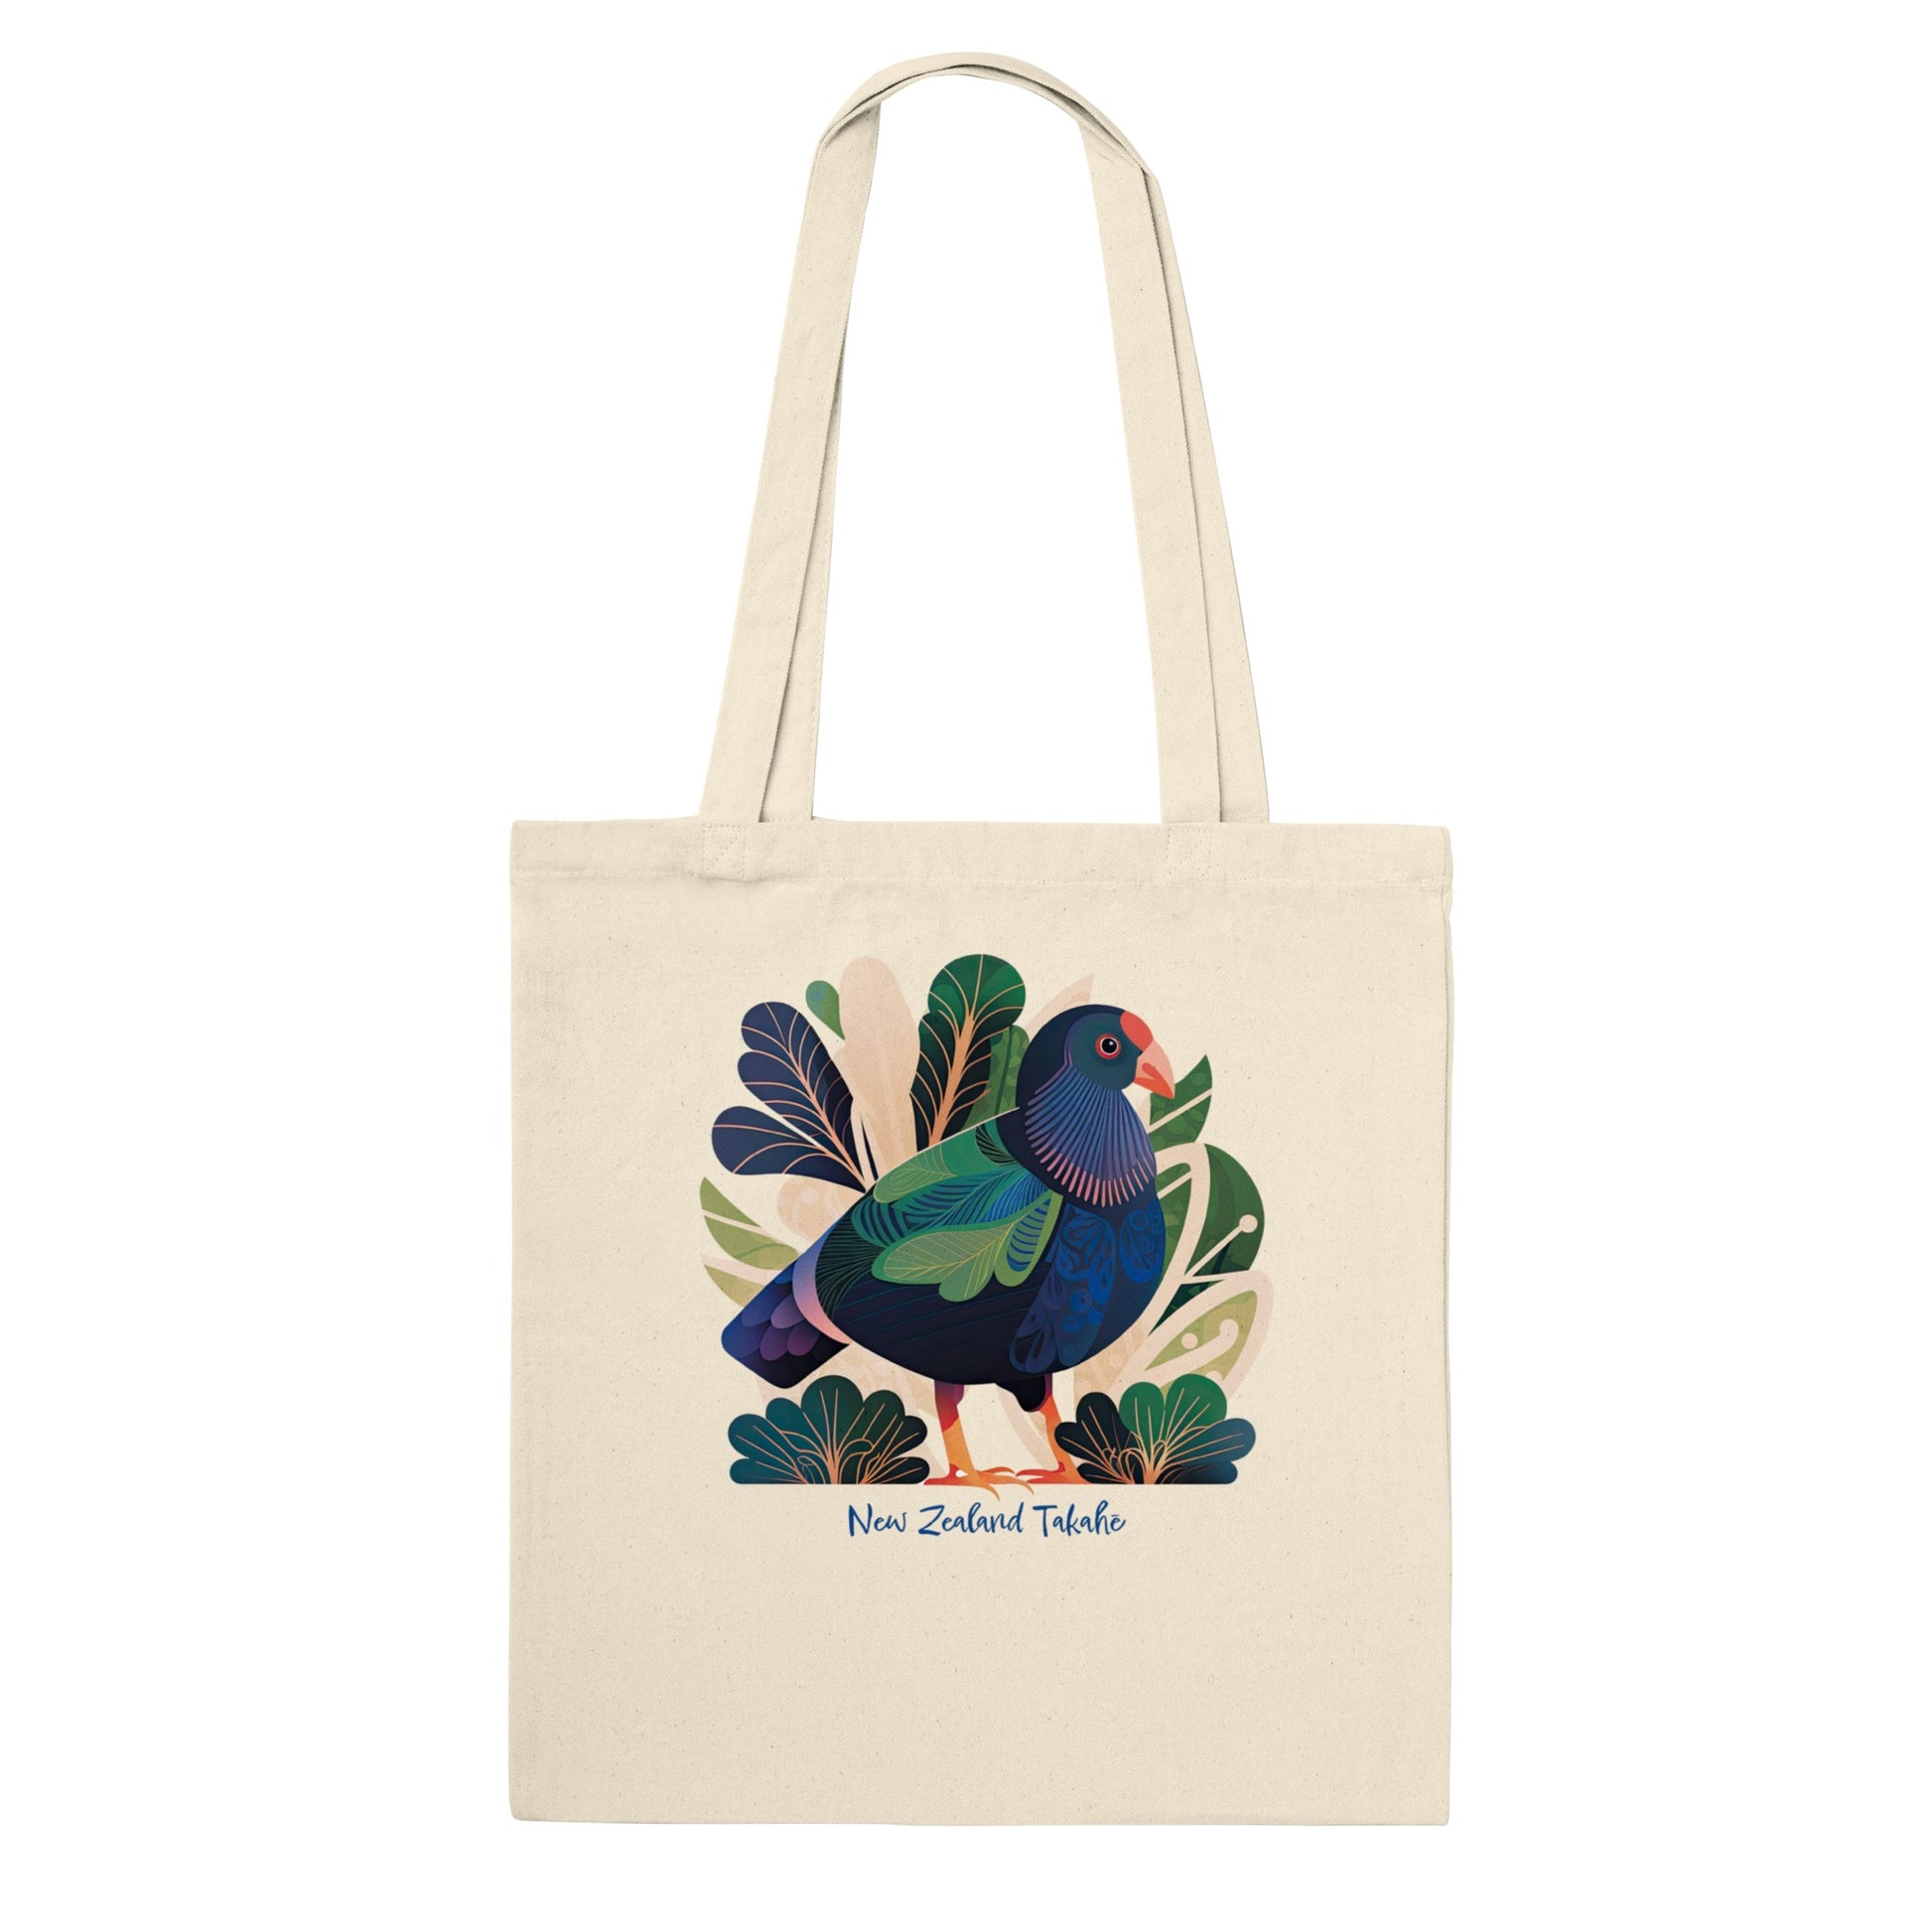 Natural tote bag with a New Zealand Takahe bird print